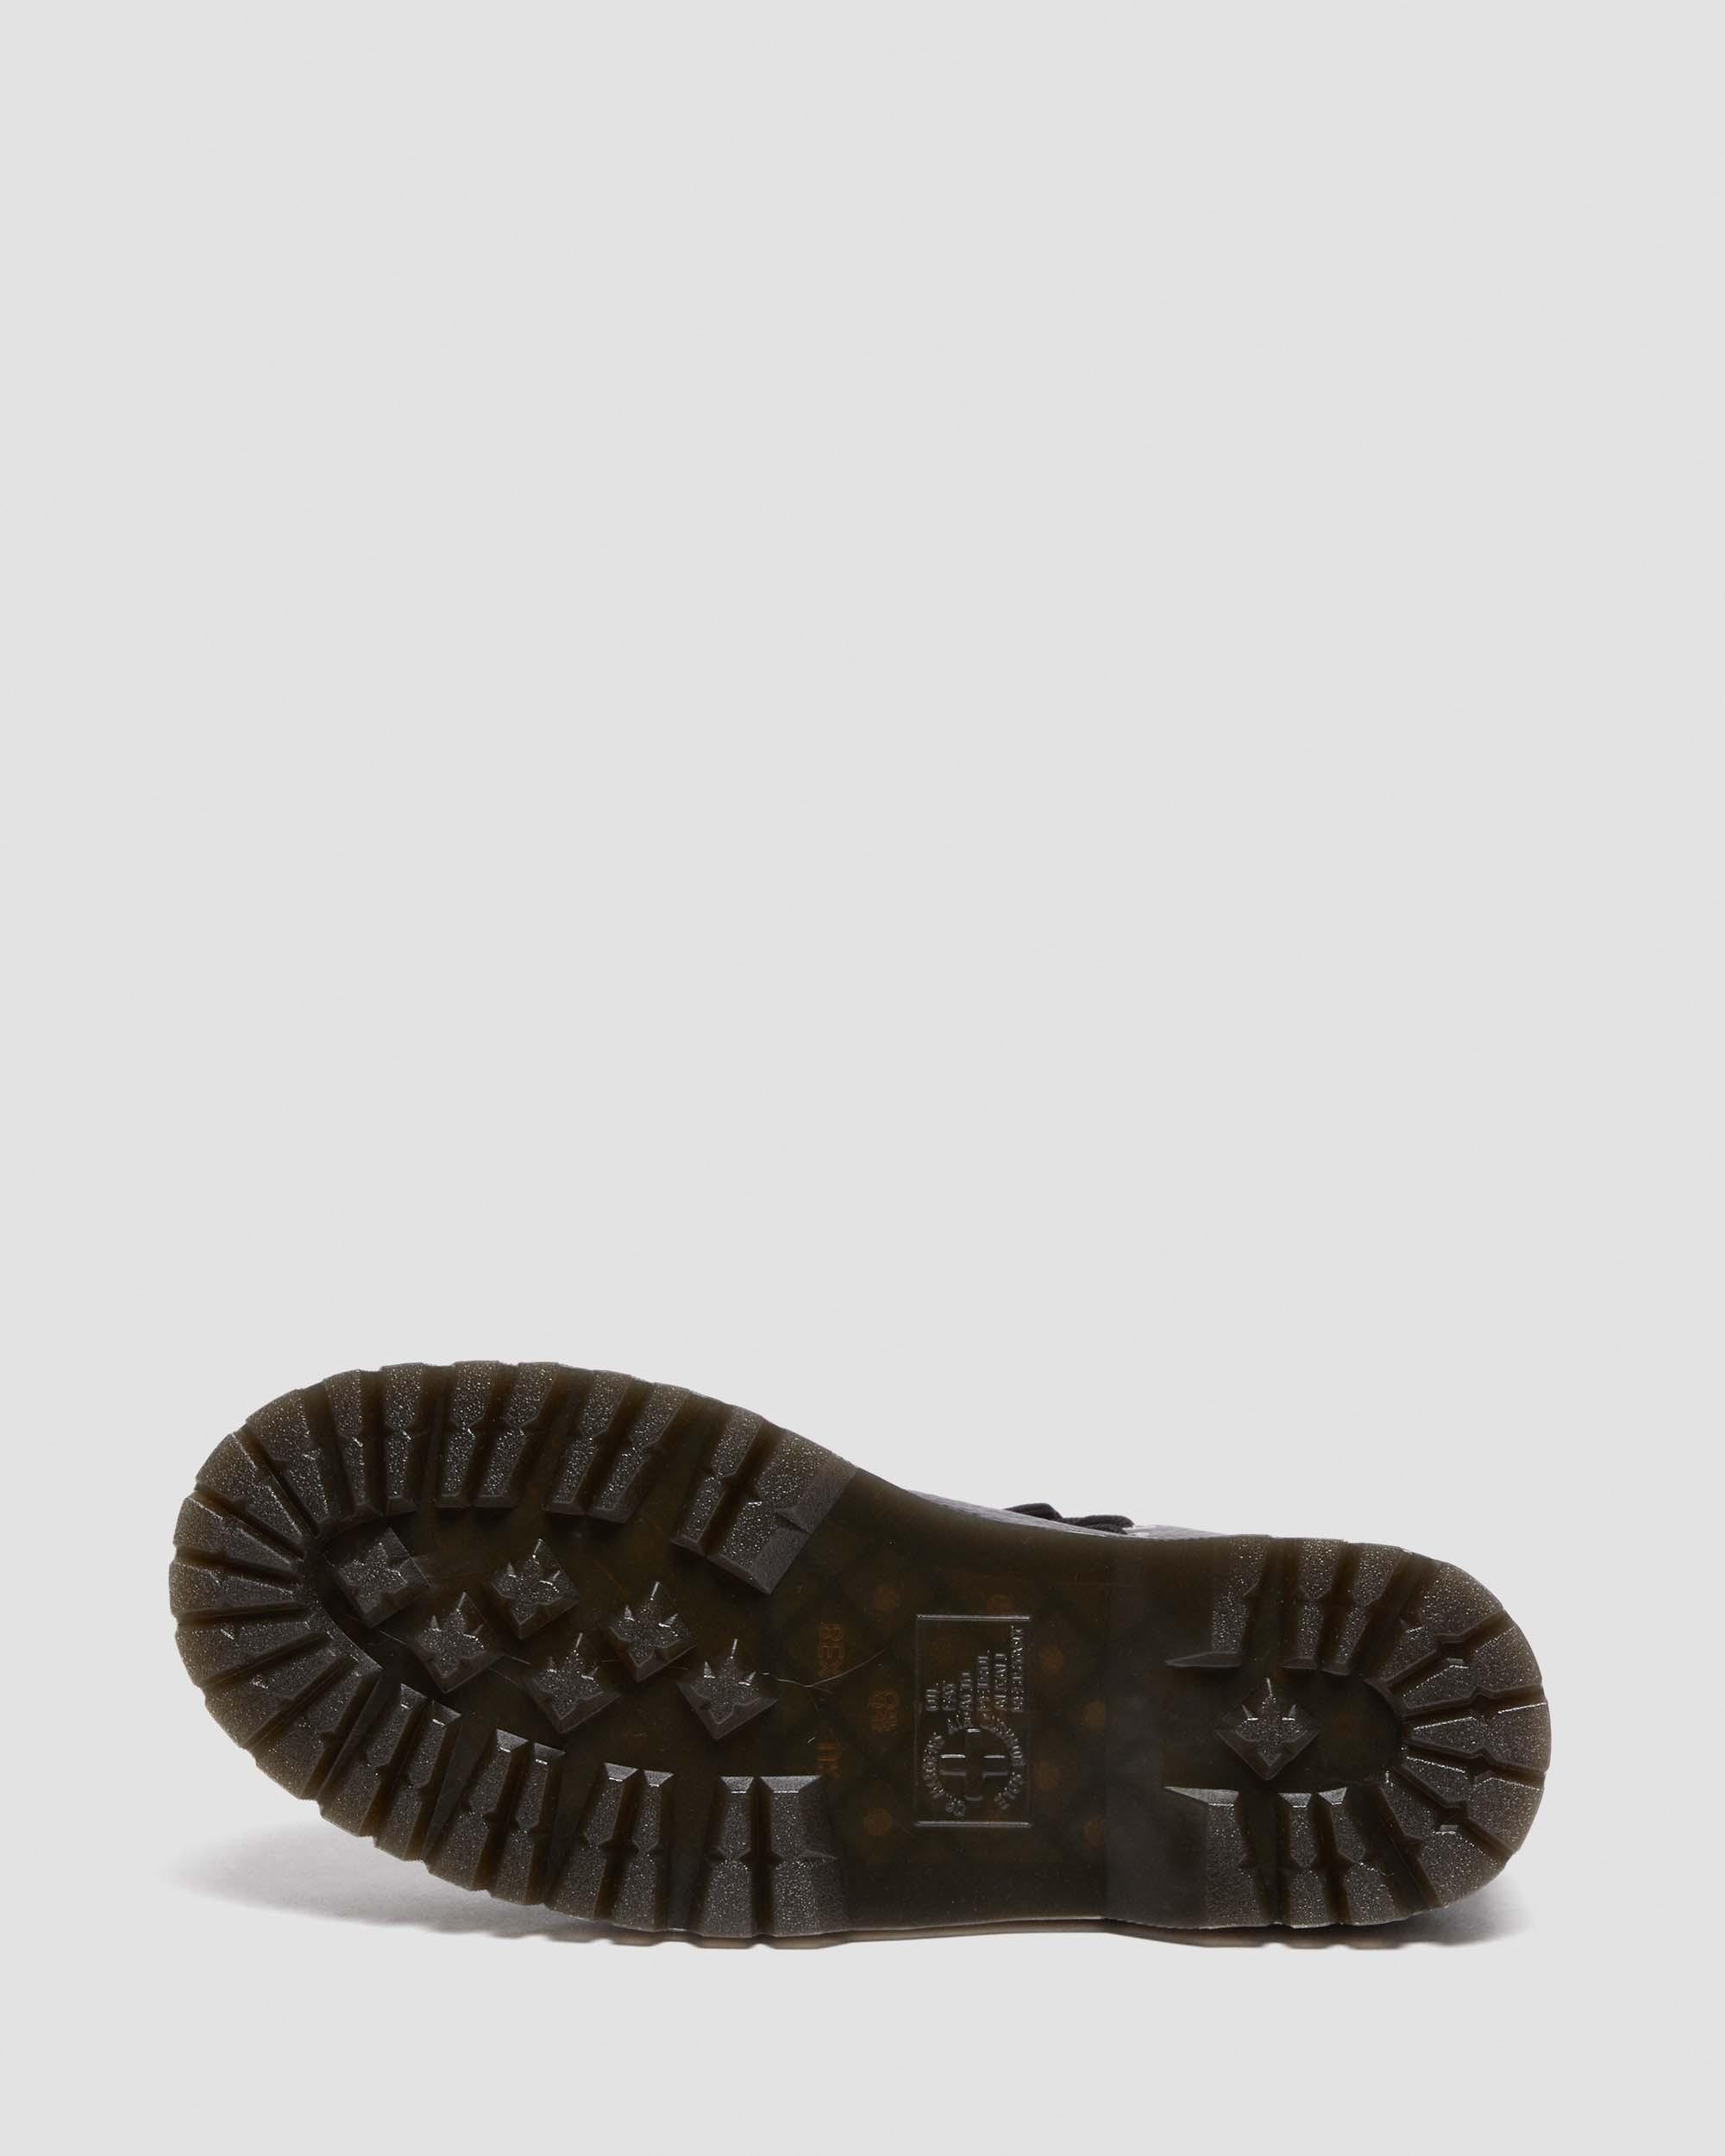 Sinclair Hi Milled Nappa Leather Platform Boots in Black | Dr. Martens